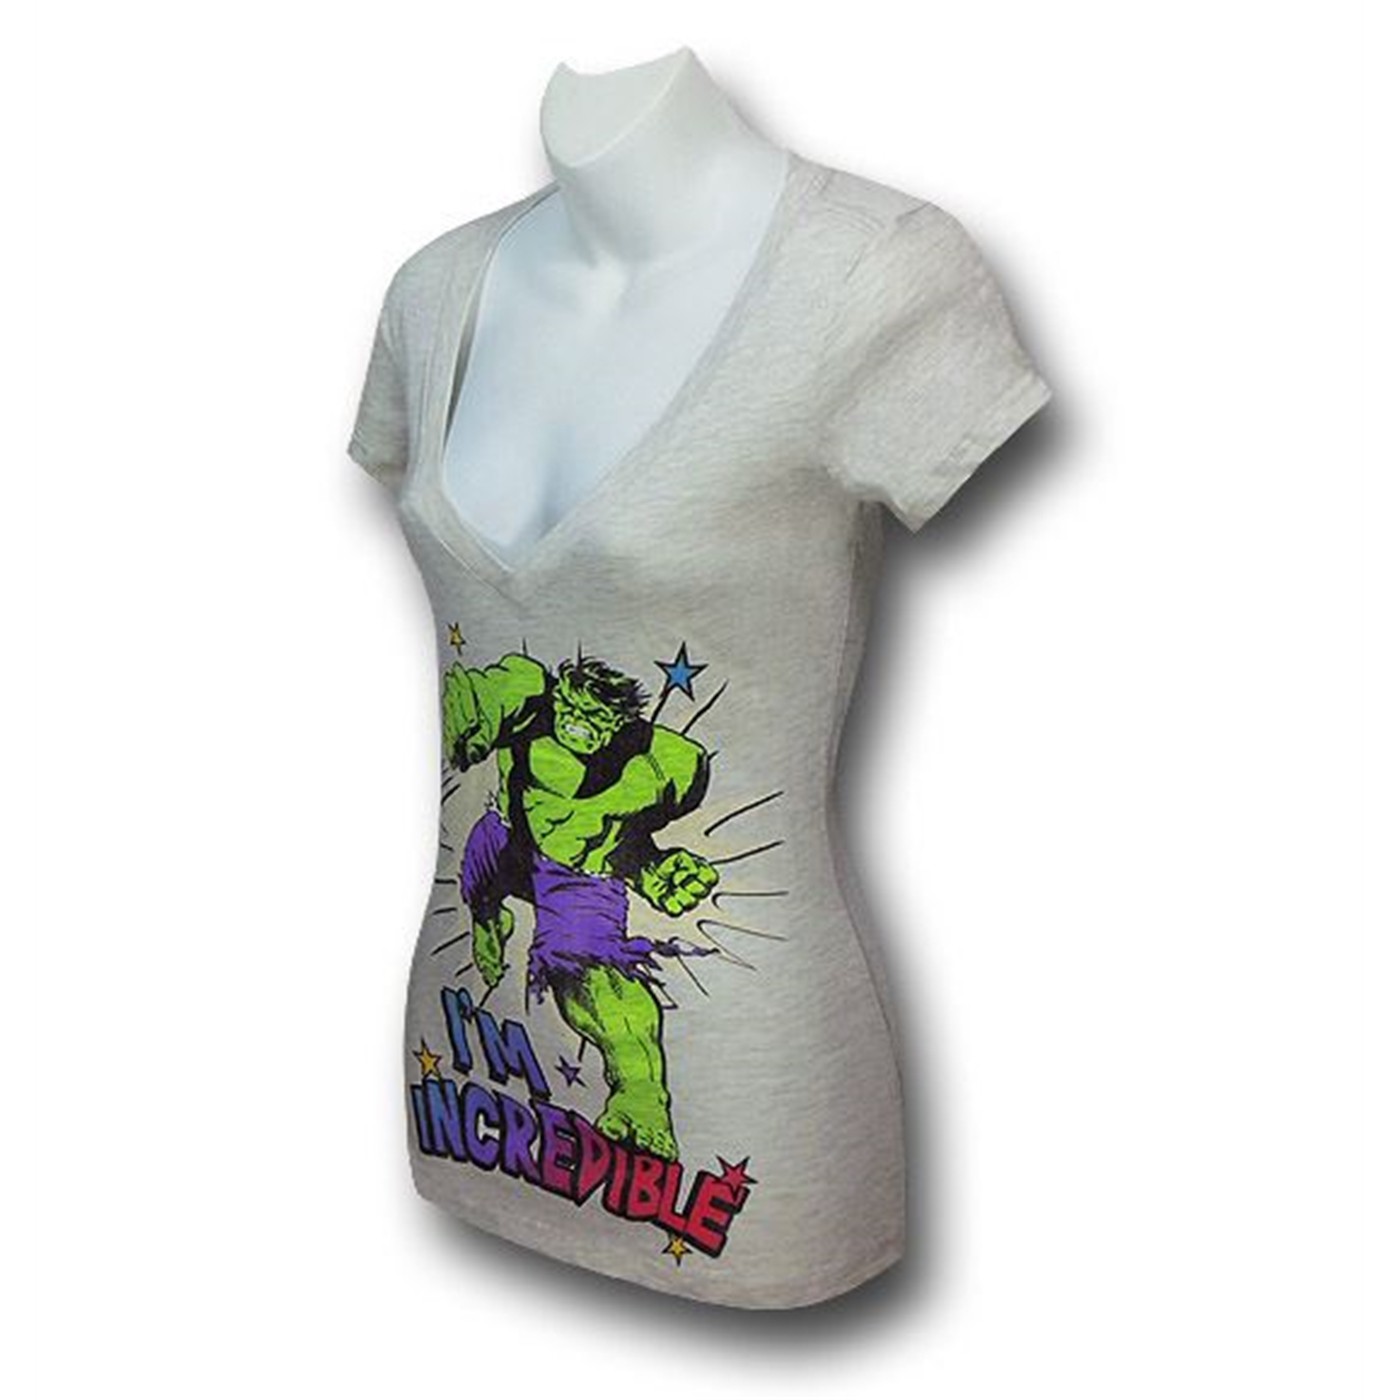 Hulk Women's I'm Incredible V-Neck T-Shirt